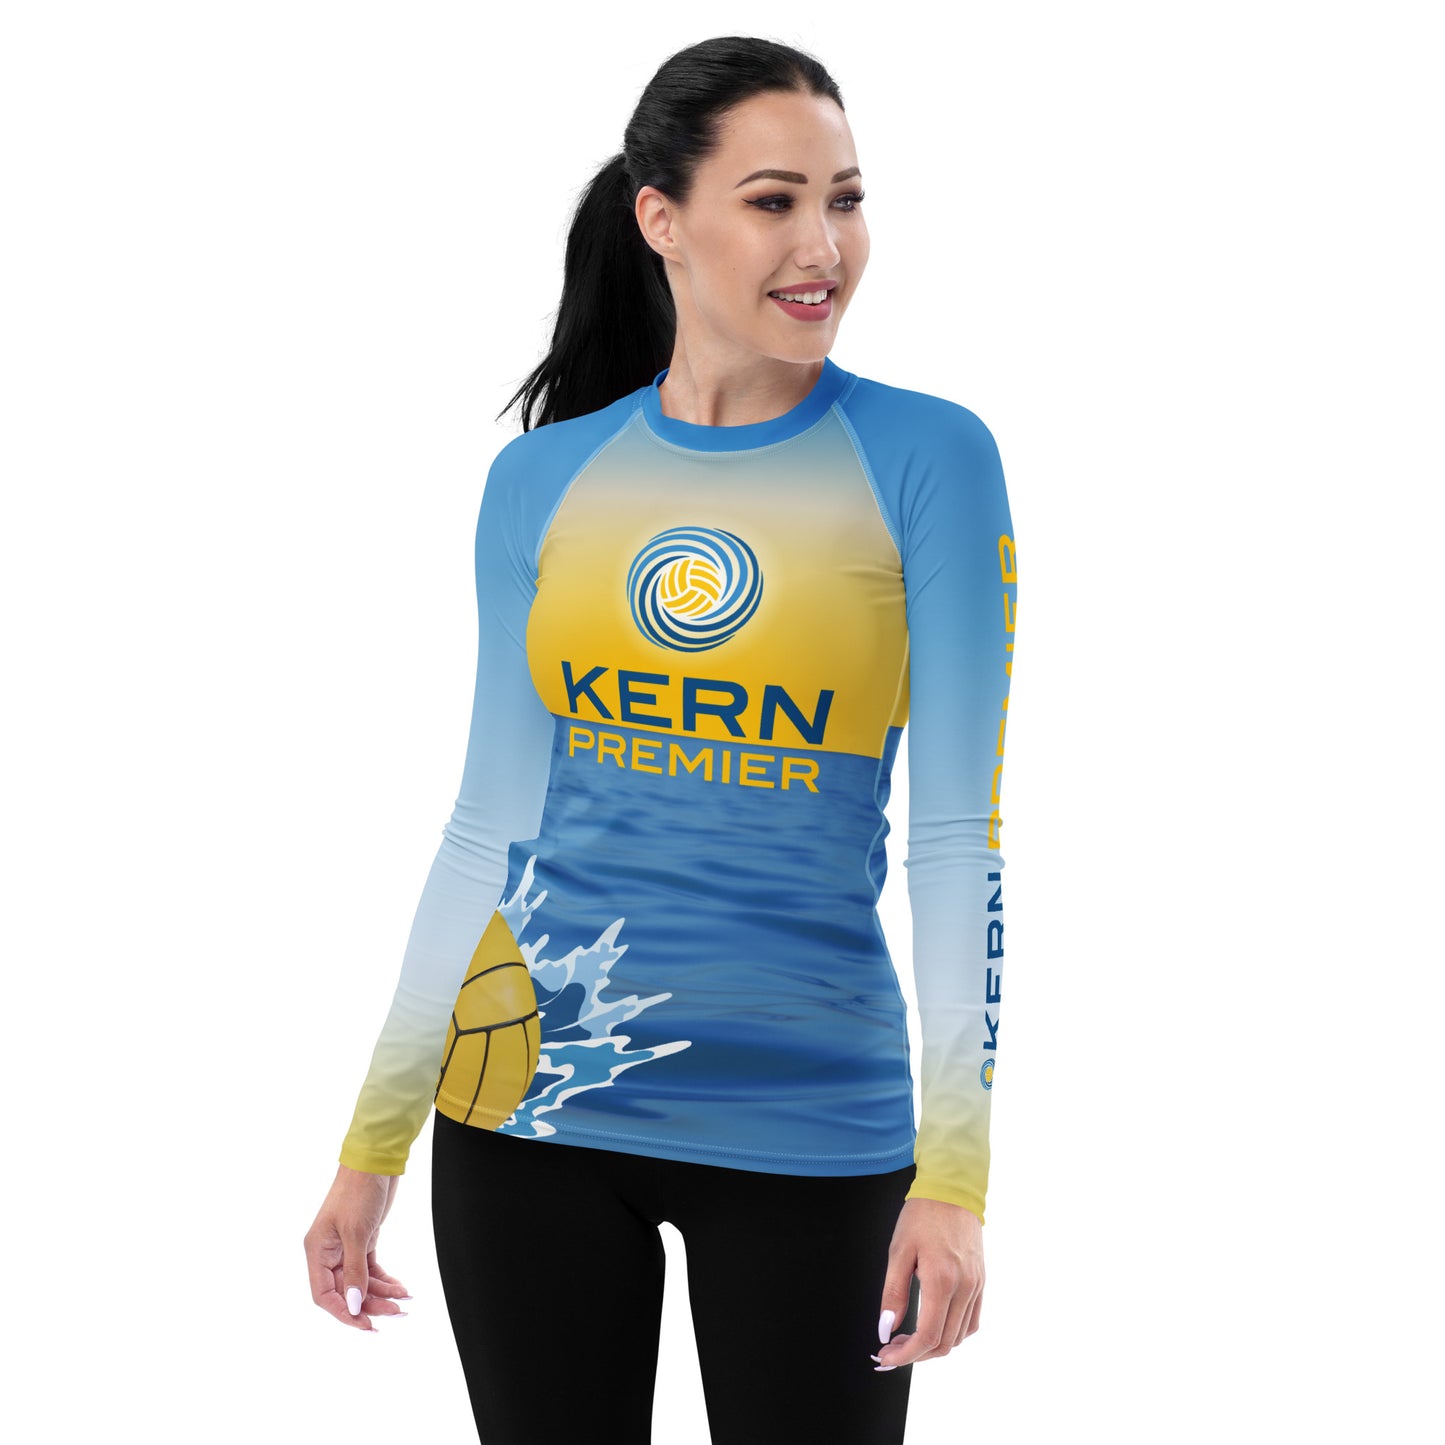 Kern Premier - Team Design -  Women's Rash Guard